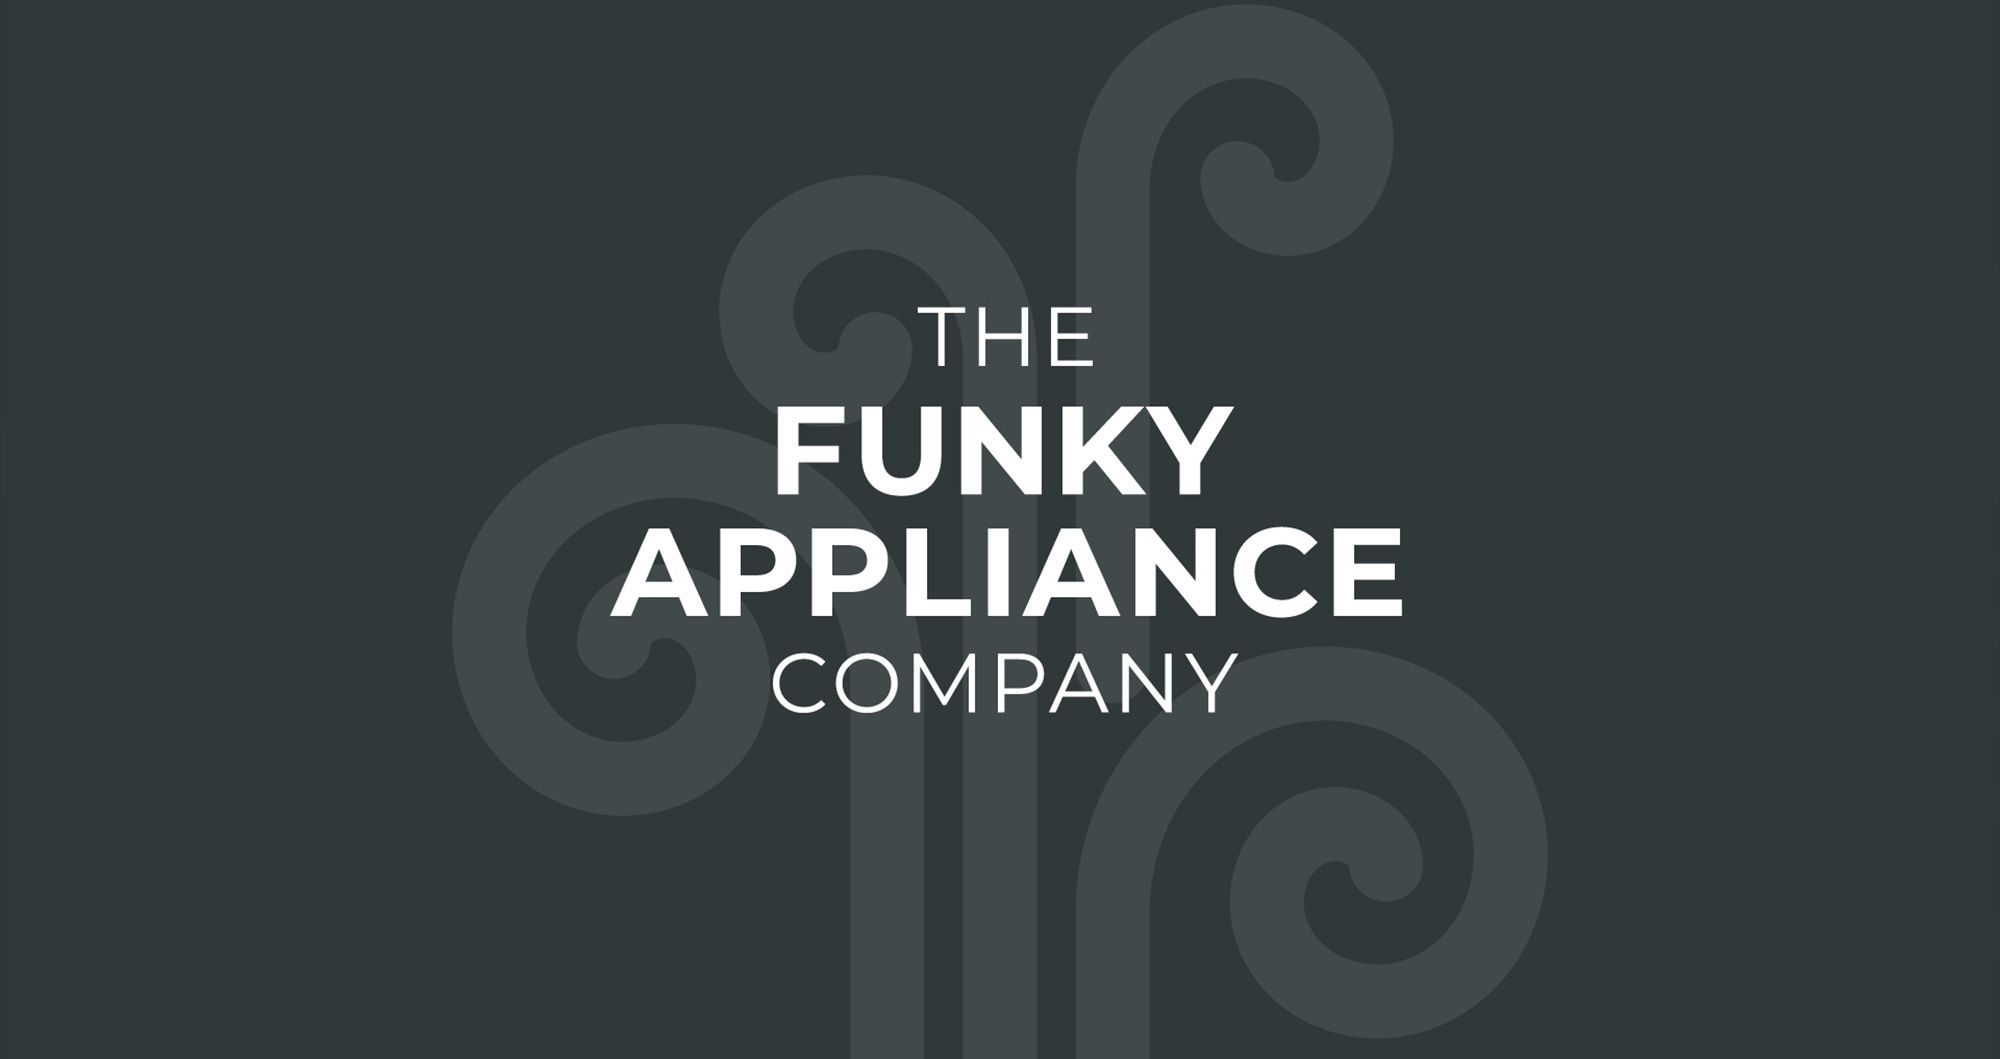 Funky appliance company logo